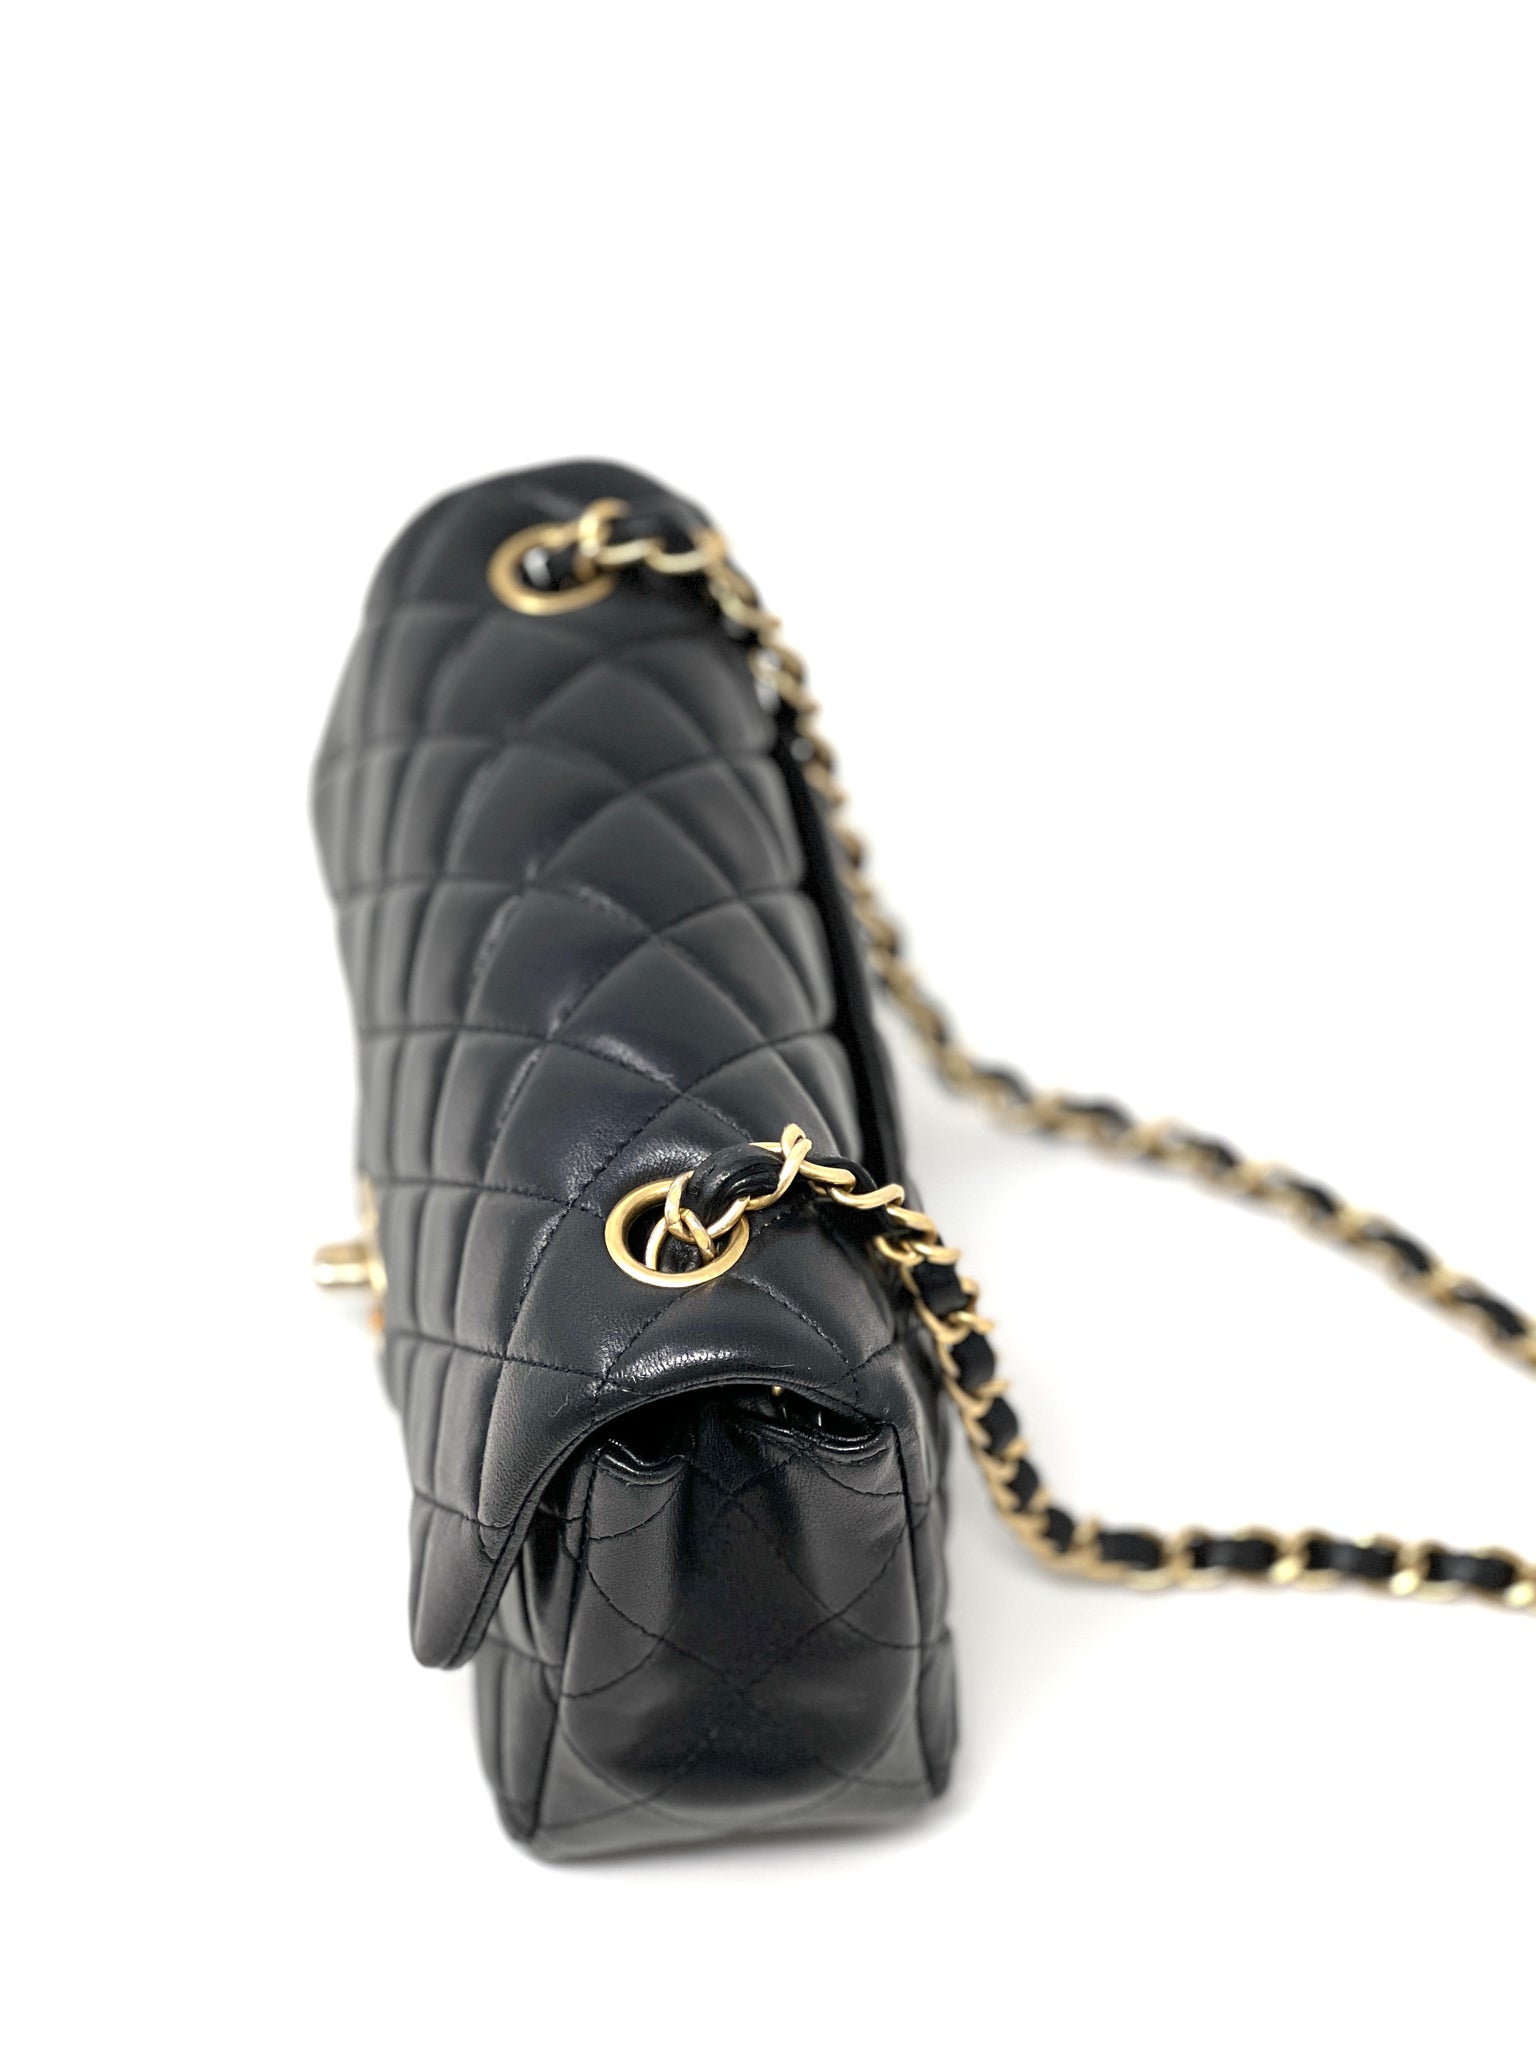 Chanel Timeless Mini Rectangular Patent Black